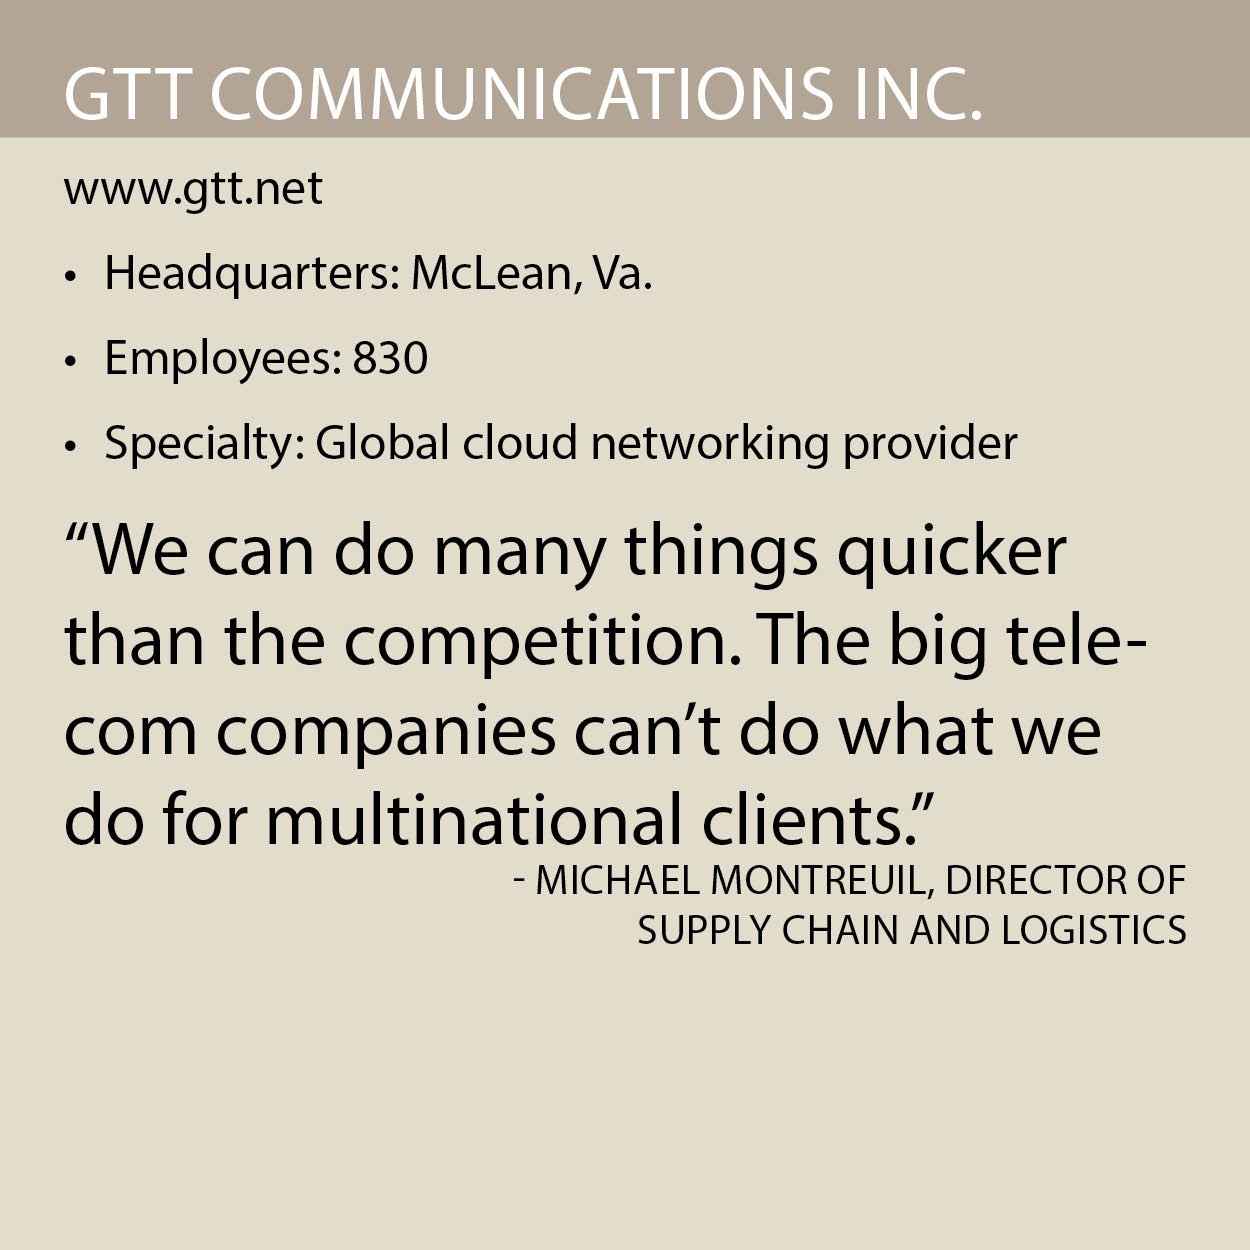 GTT Communications Inc. fact box